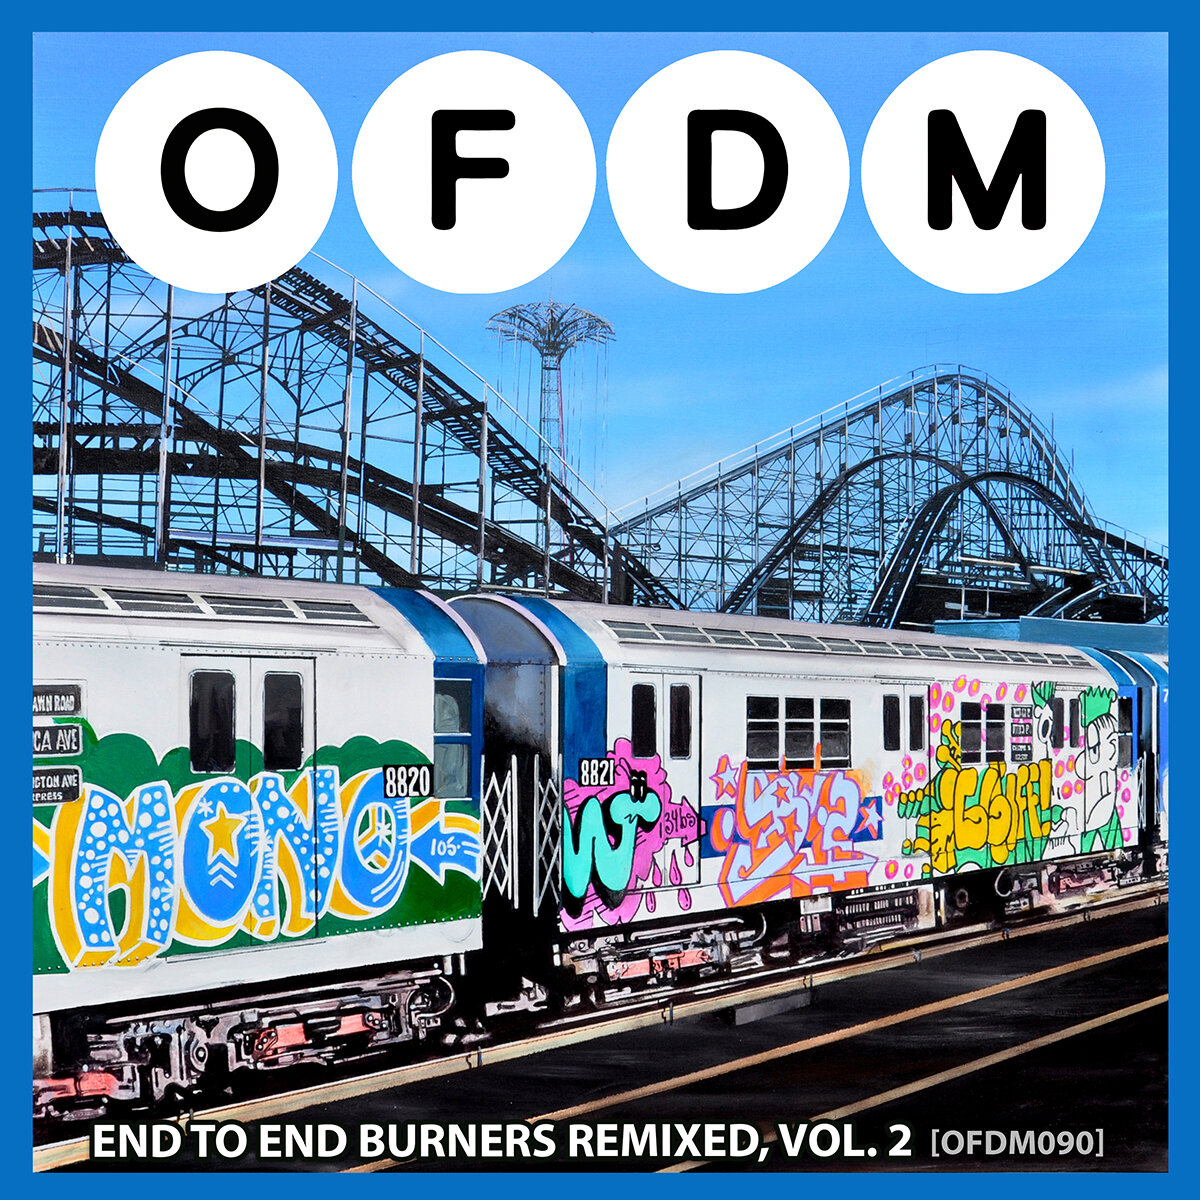 [OFDM090] VA - End To End Burners Remixed, Vol. 2 (ARTWORK) 1200x1200.jpg